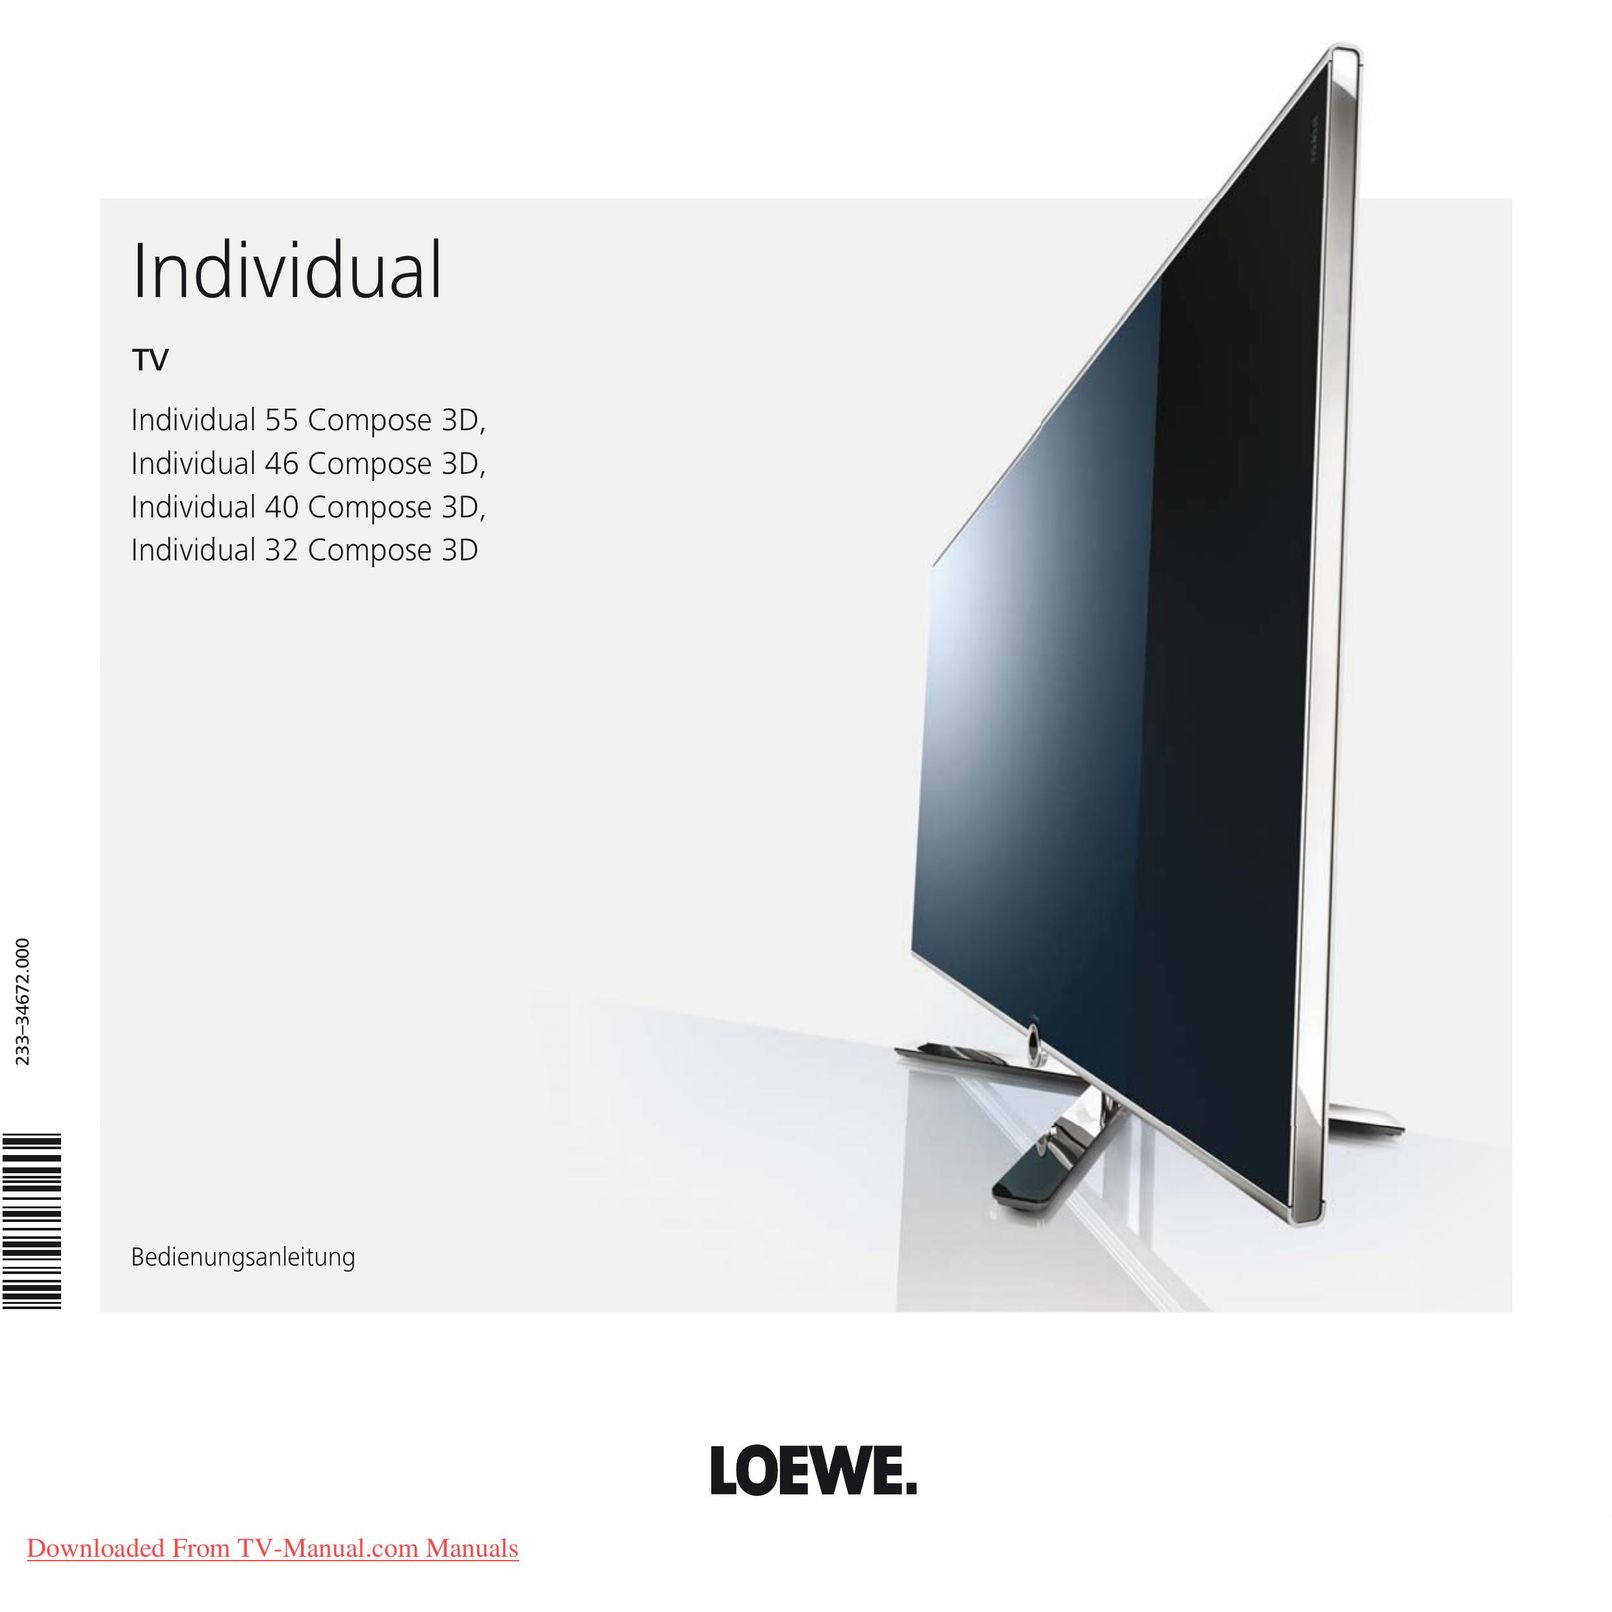 Loewe Individual 46 Compose 3D TV Antenna User Manual